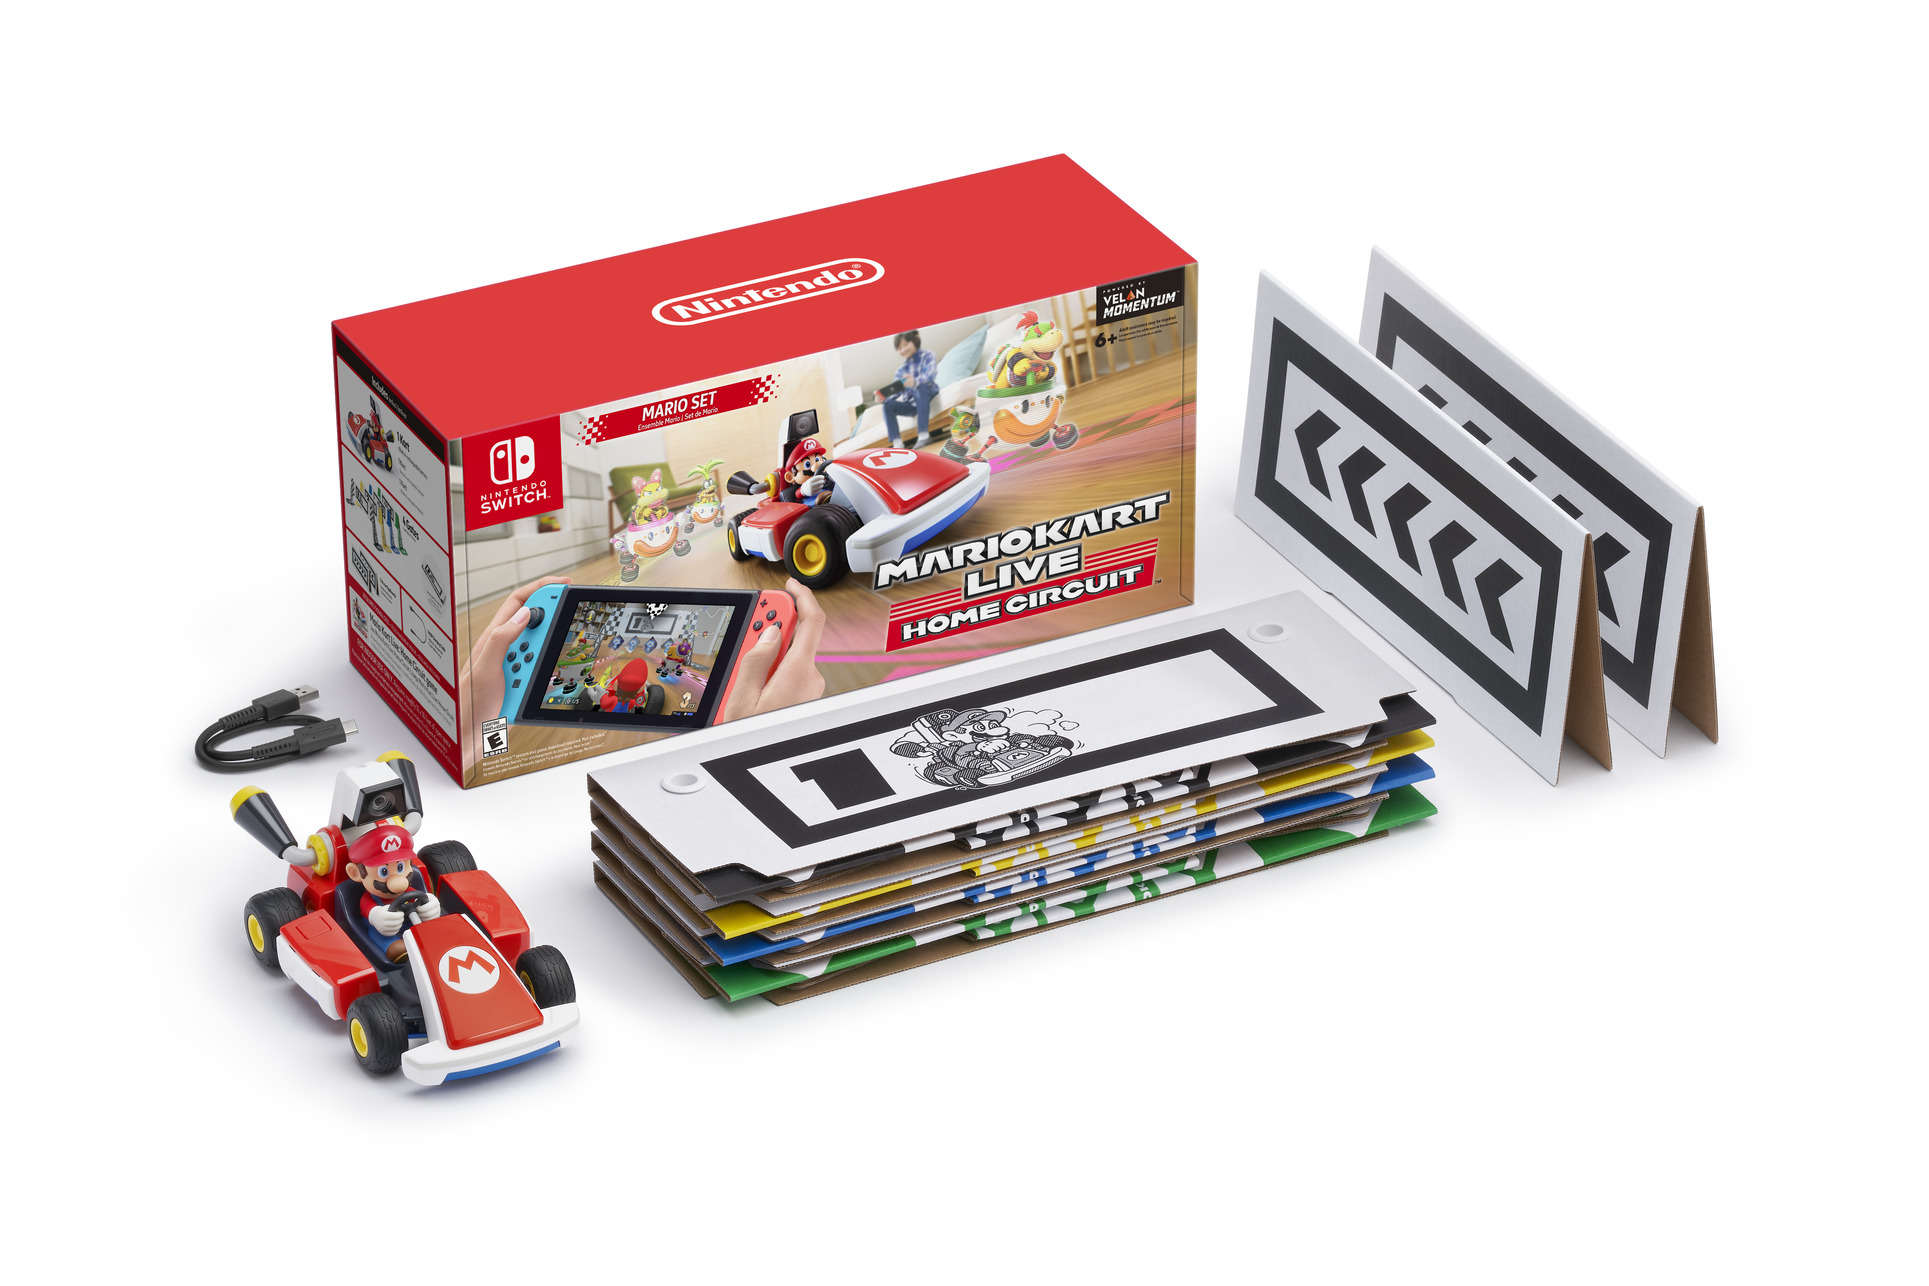 Mario Kart Live: Home Circuit Mario Set - Walmart - $67.50 - YMMV